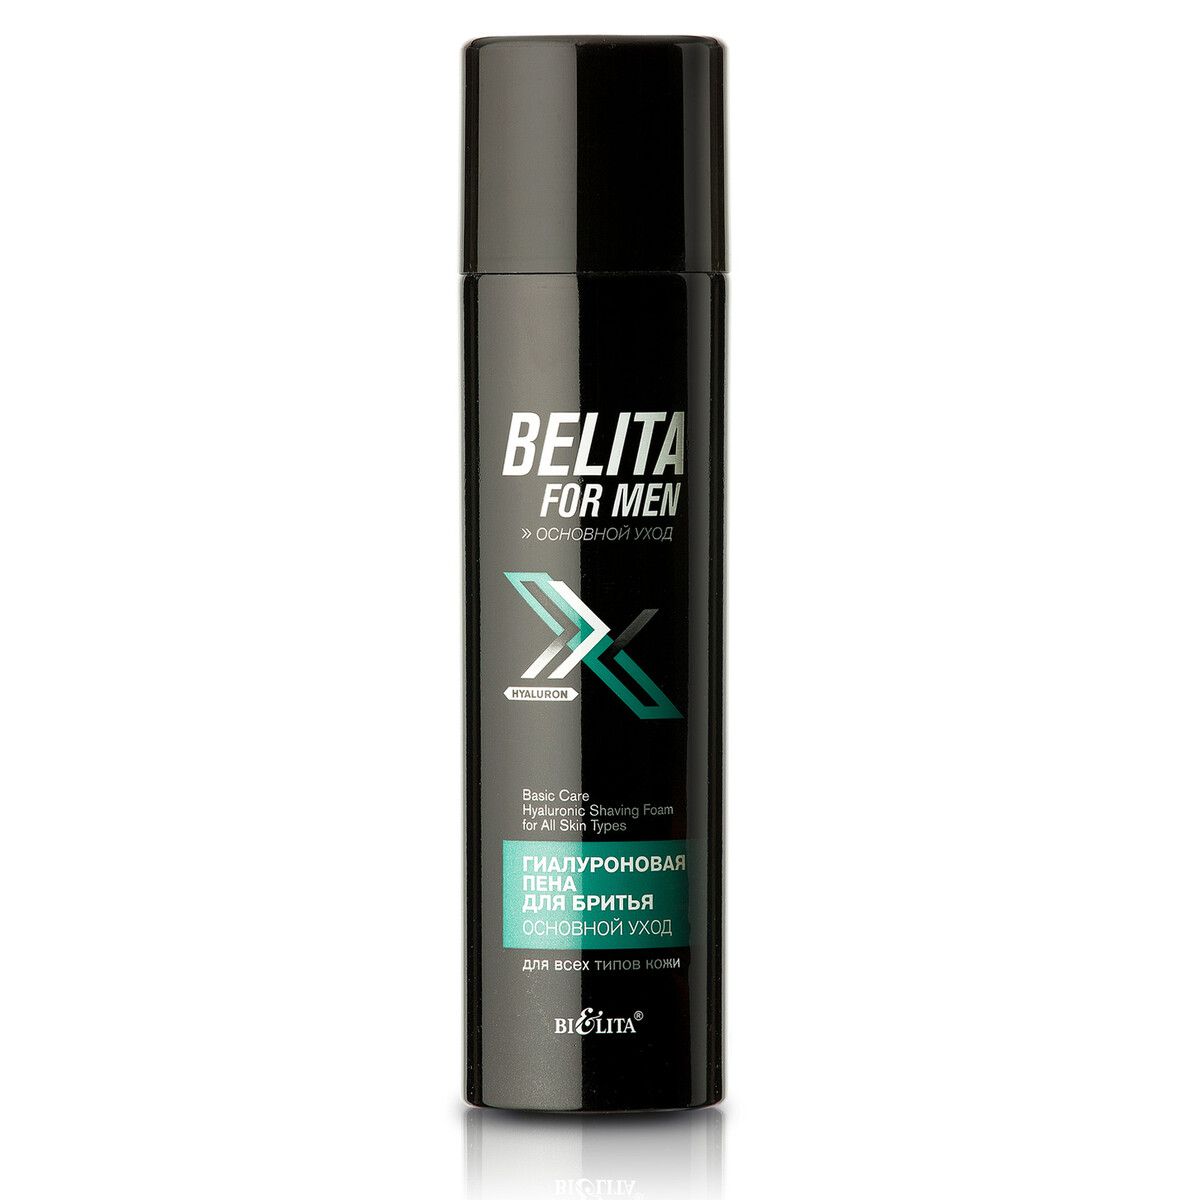  / belita for men  